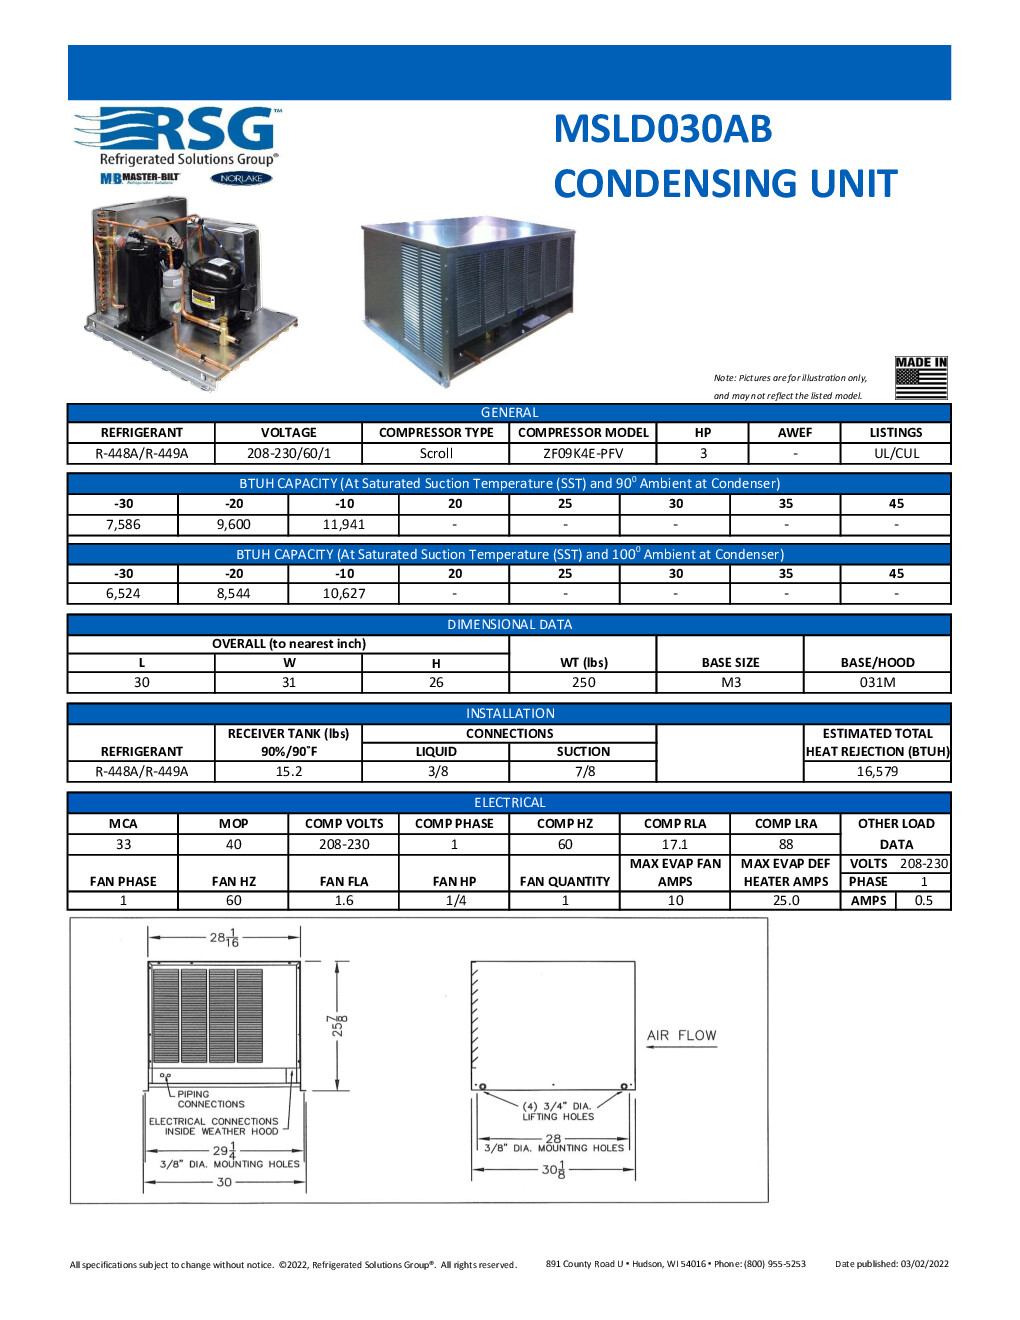 Master-Bilt MSLD030AB Remote Low Temp Scroll Condensing Unit, 3 HP, 208-230v/60/1-ph, 8544 BTU